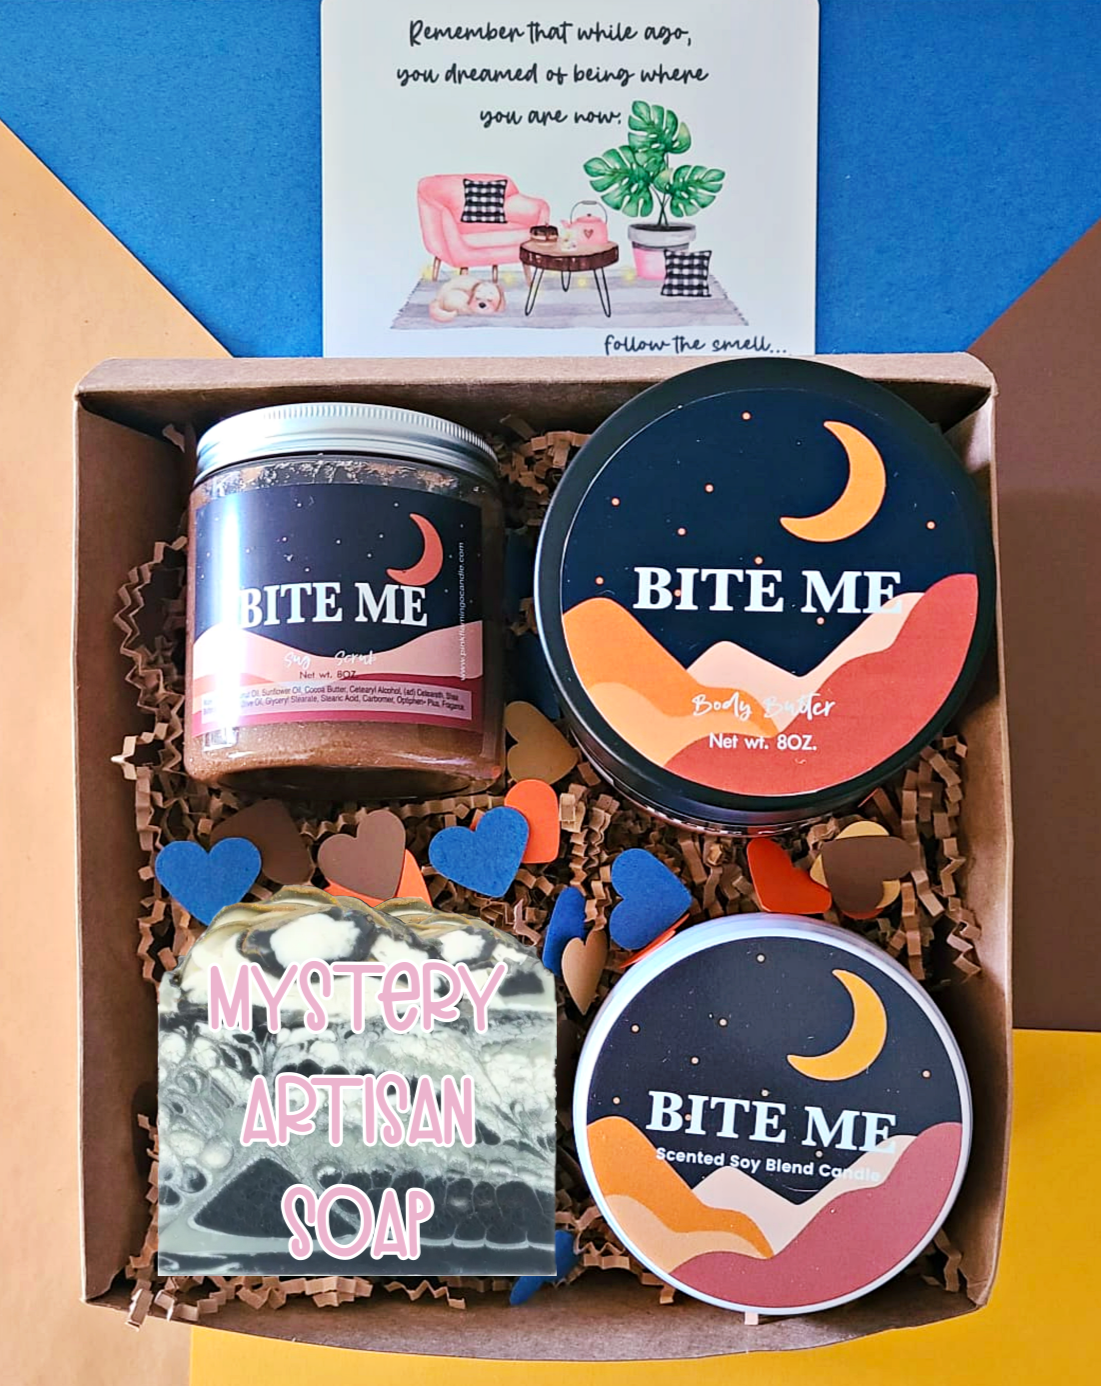 Bite me gift set